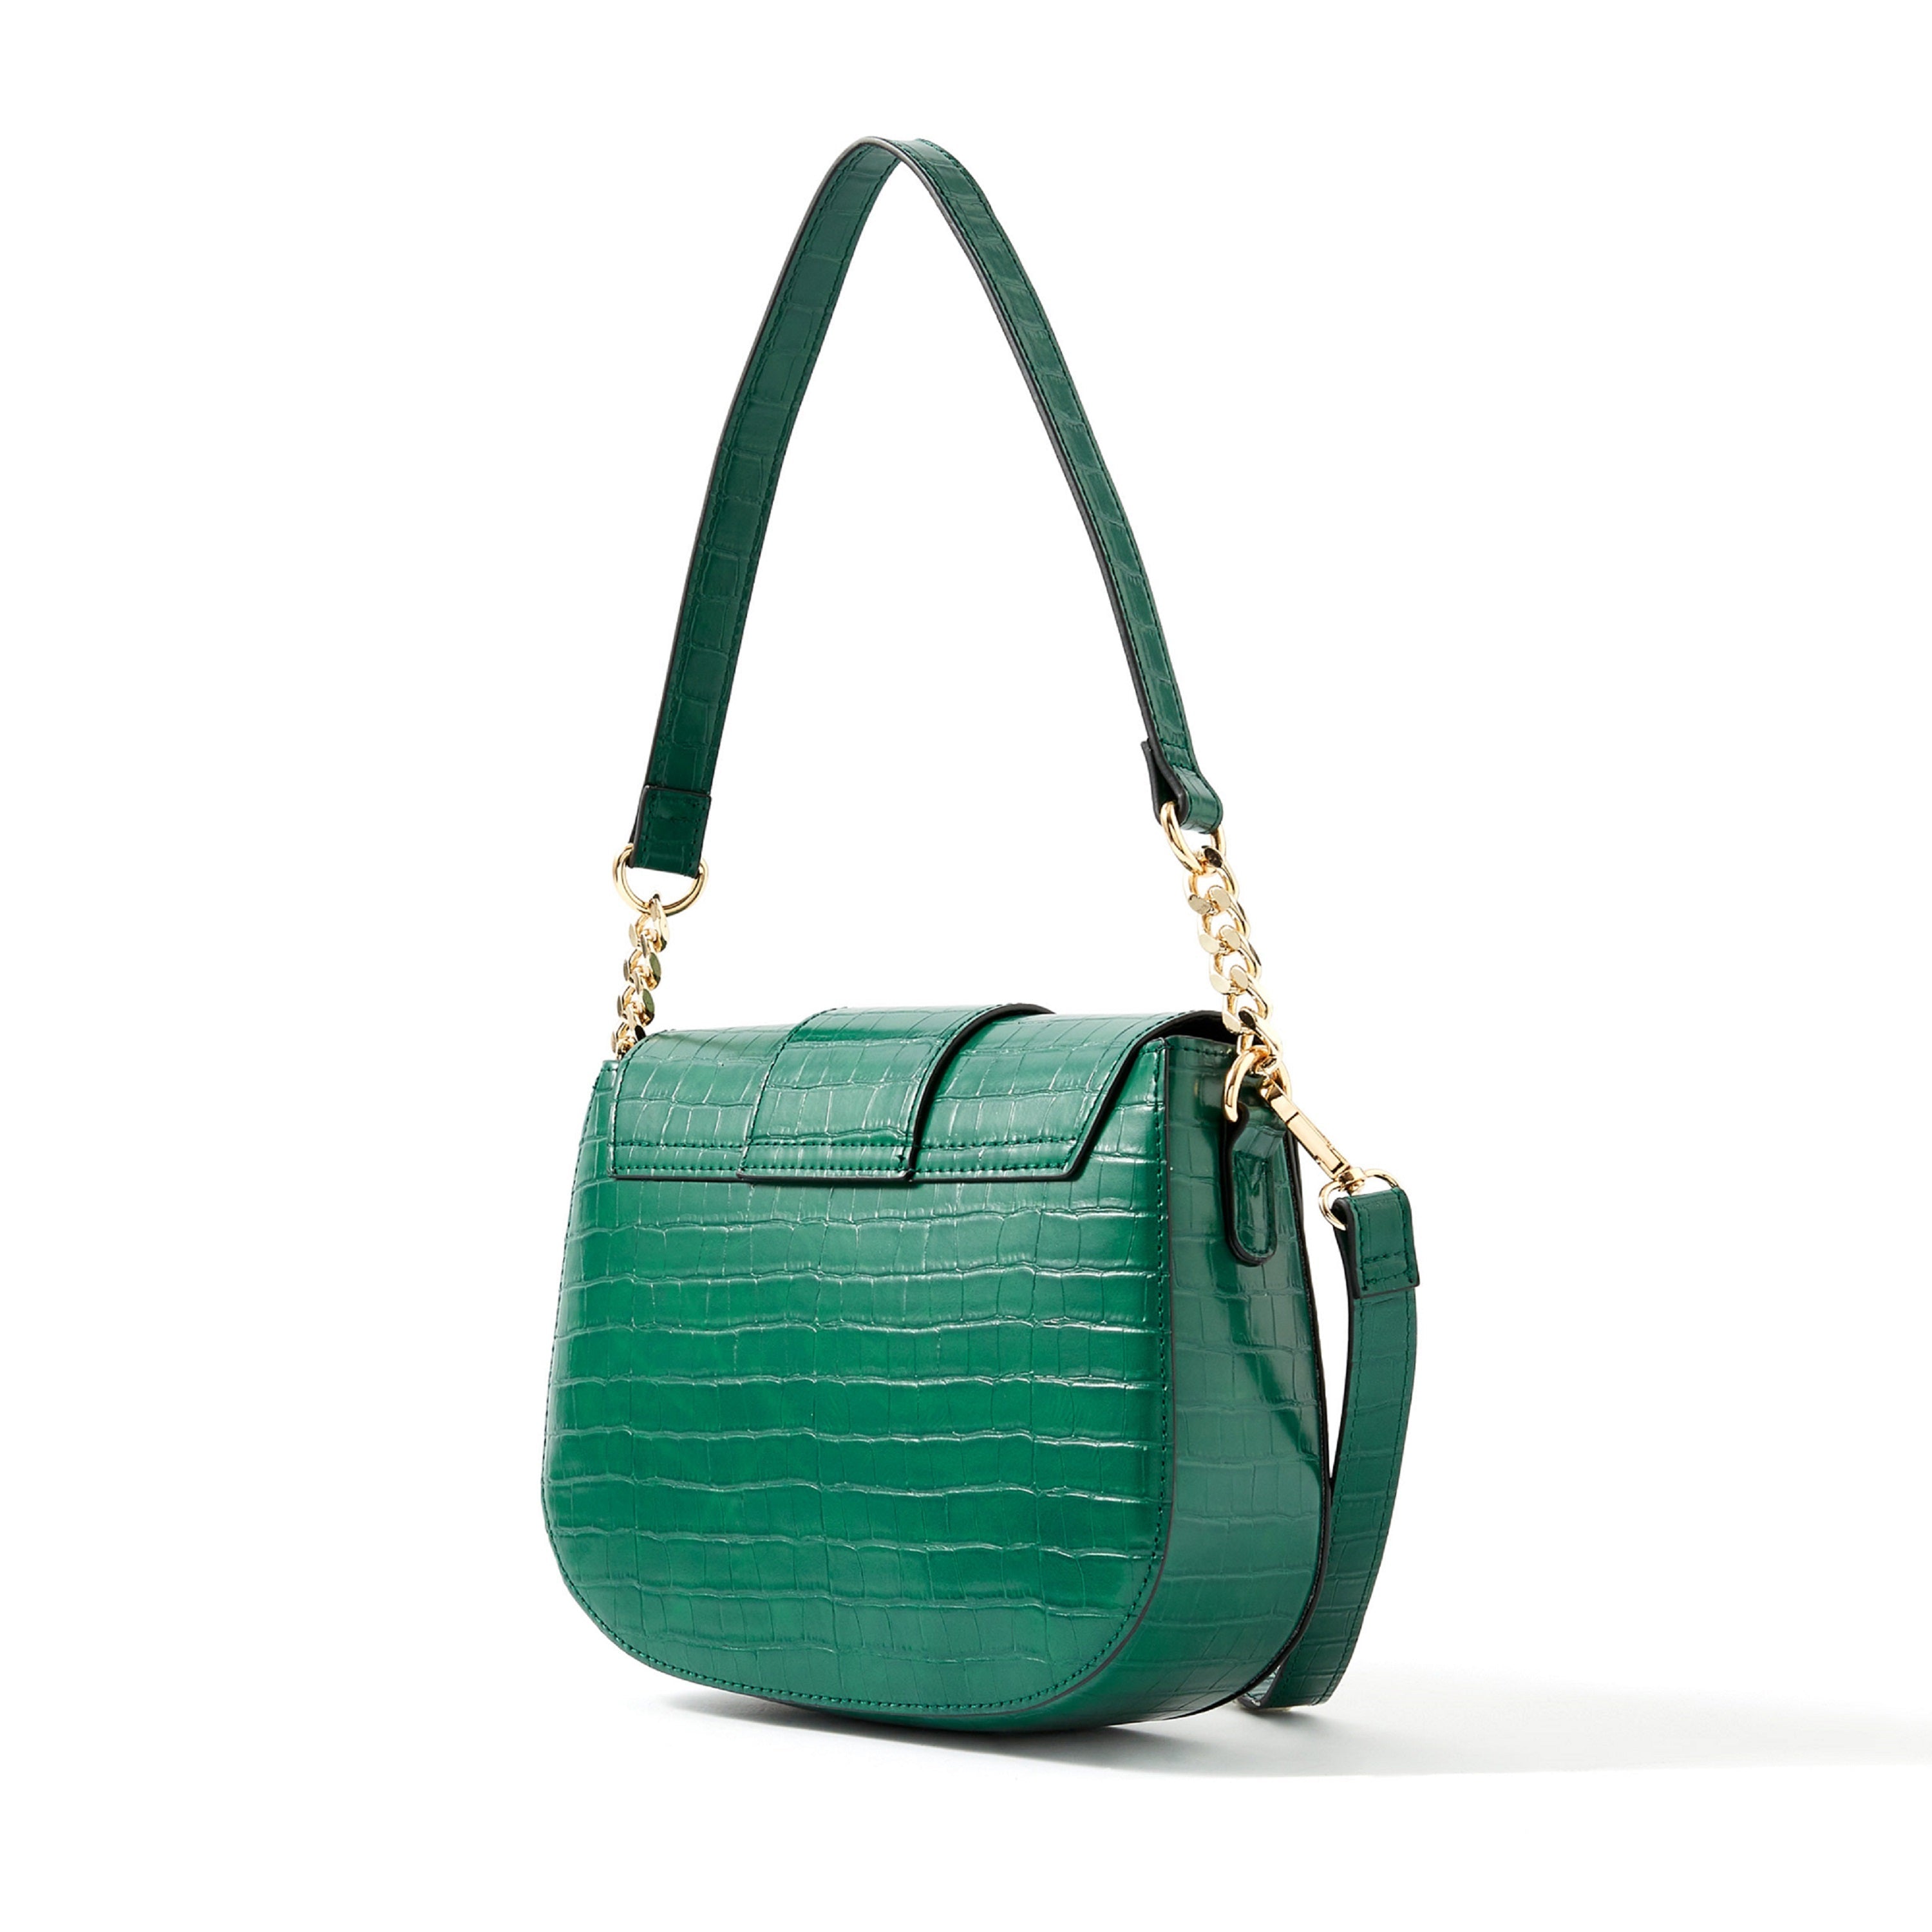 Accessorize London women's Faux Leather Green Buckle Saddle Shoulder & Sling bag